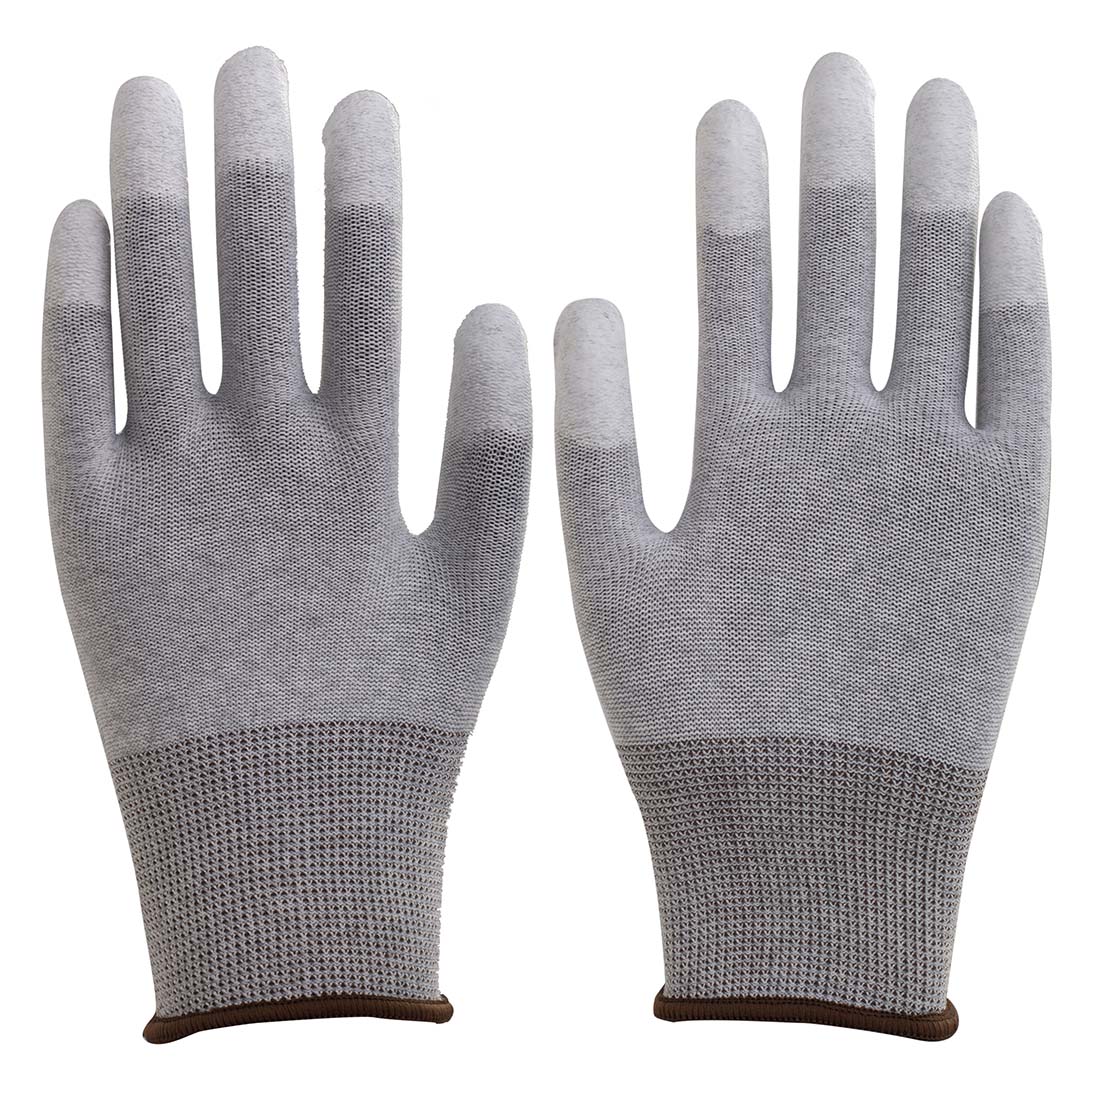 13G nylon & carbon fiber gloves PU fingertips coated, ESD gloves, Screen Touch